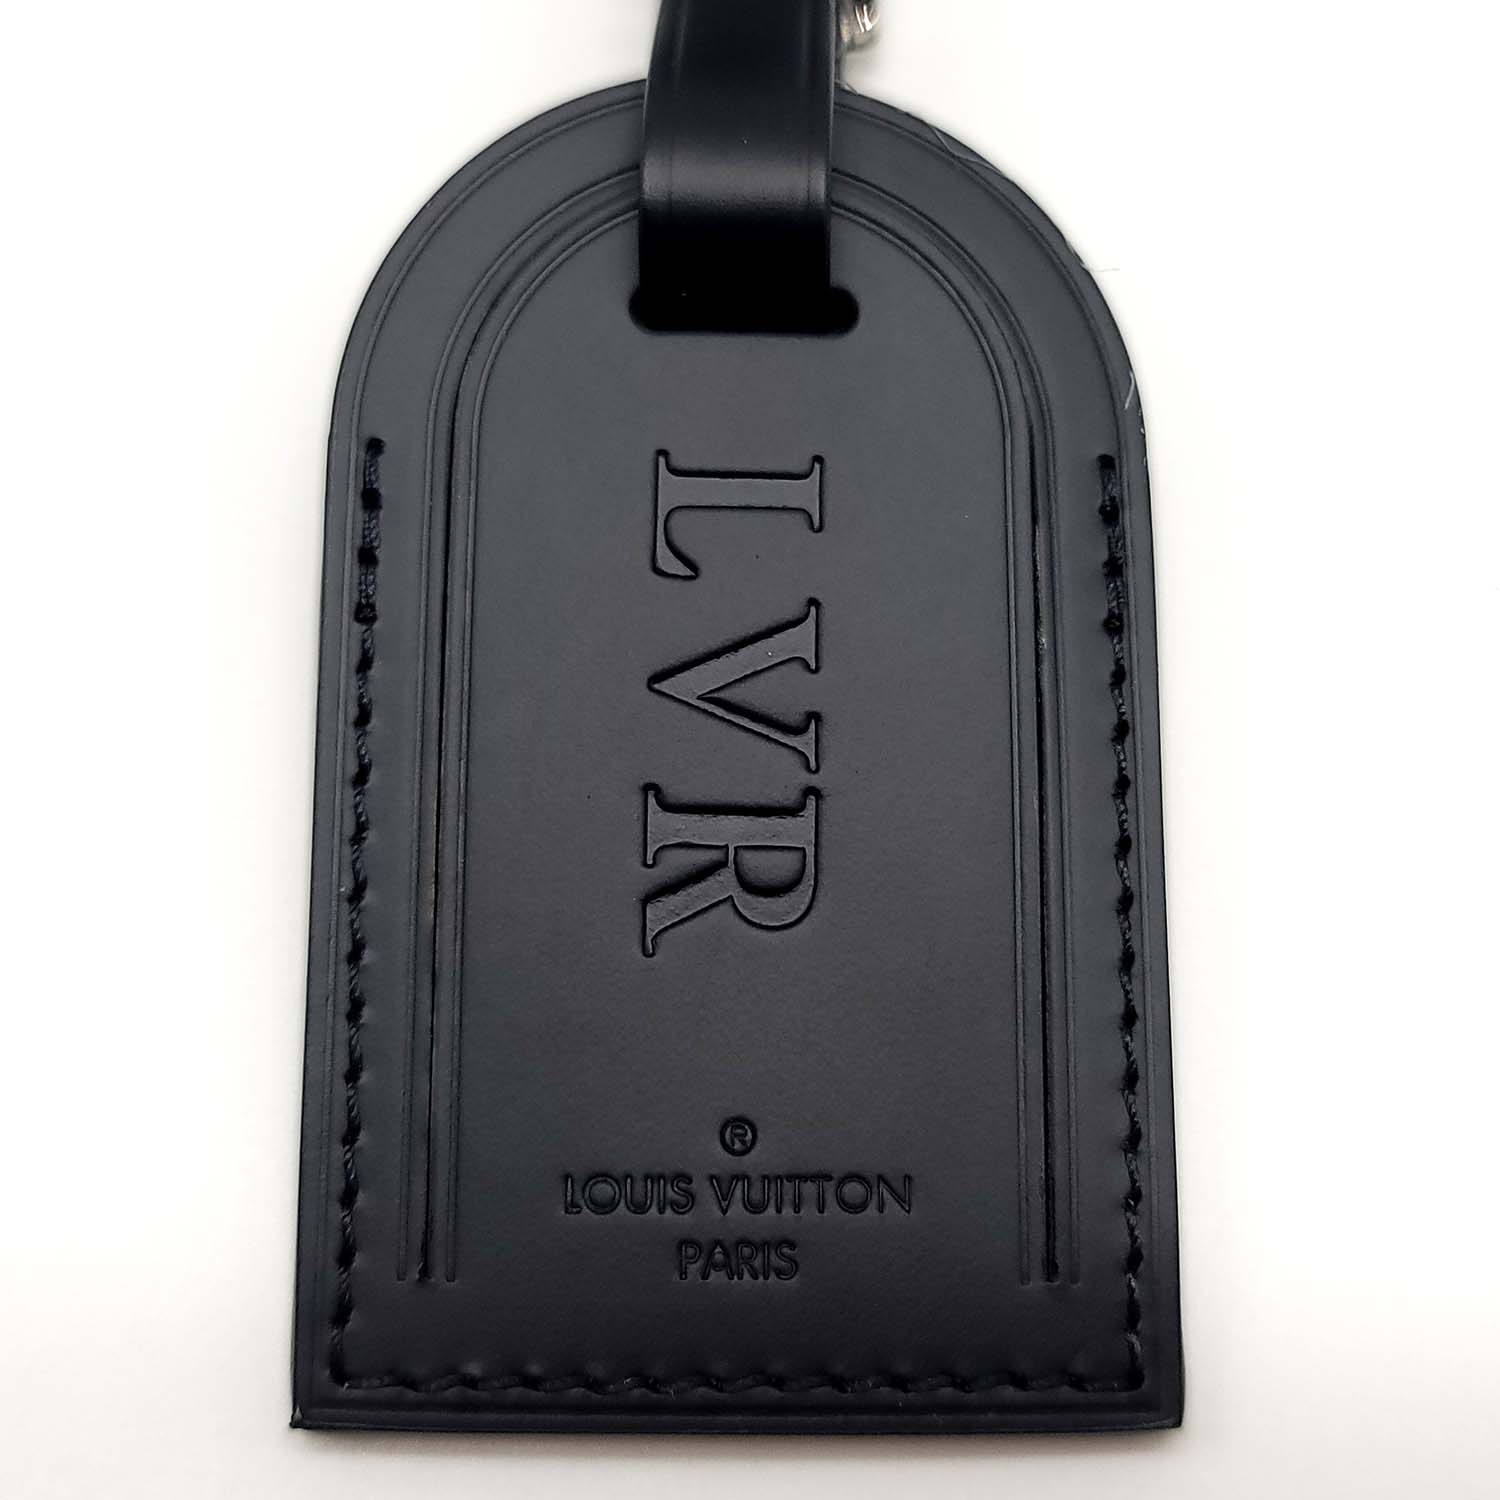 Louis Vuitton Las Vegas Raiders (LVR) Large Luggage Tag Black – Dr. Runway